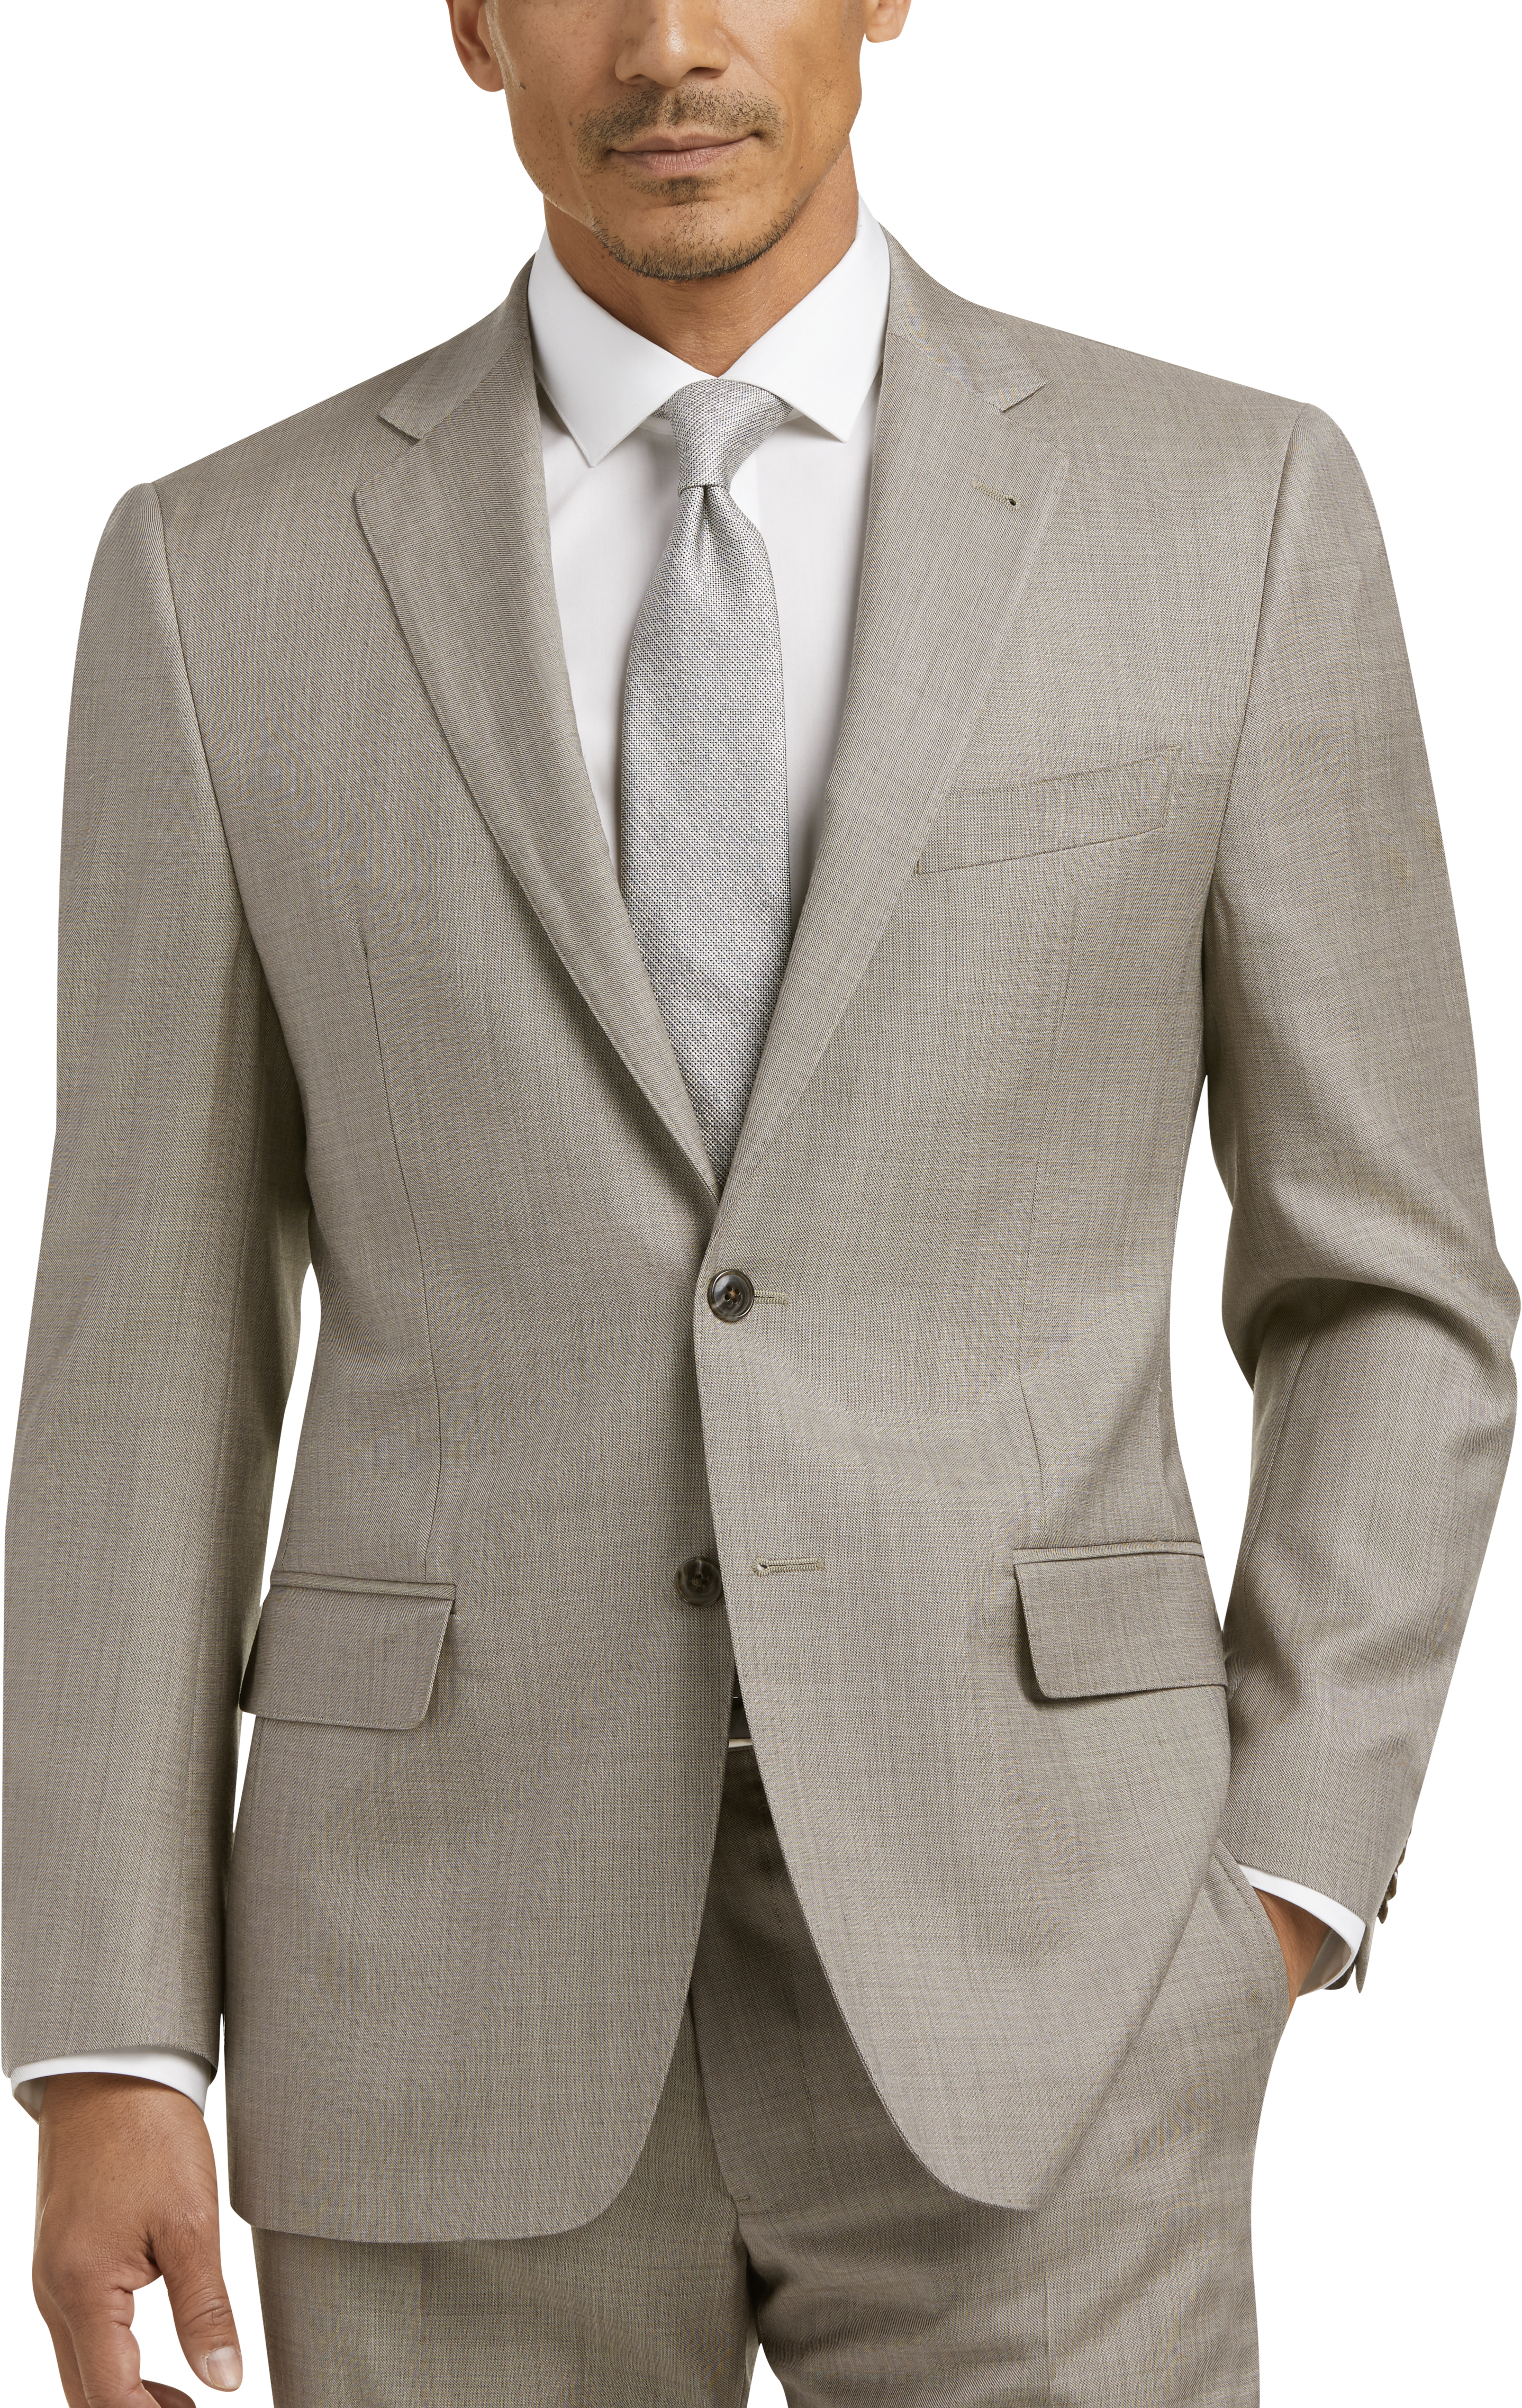 Joseph Abboud Tan Sharkskin Slim Fit Suit - Men's Modern Fit | Men's ...